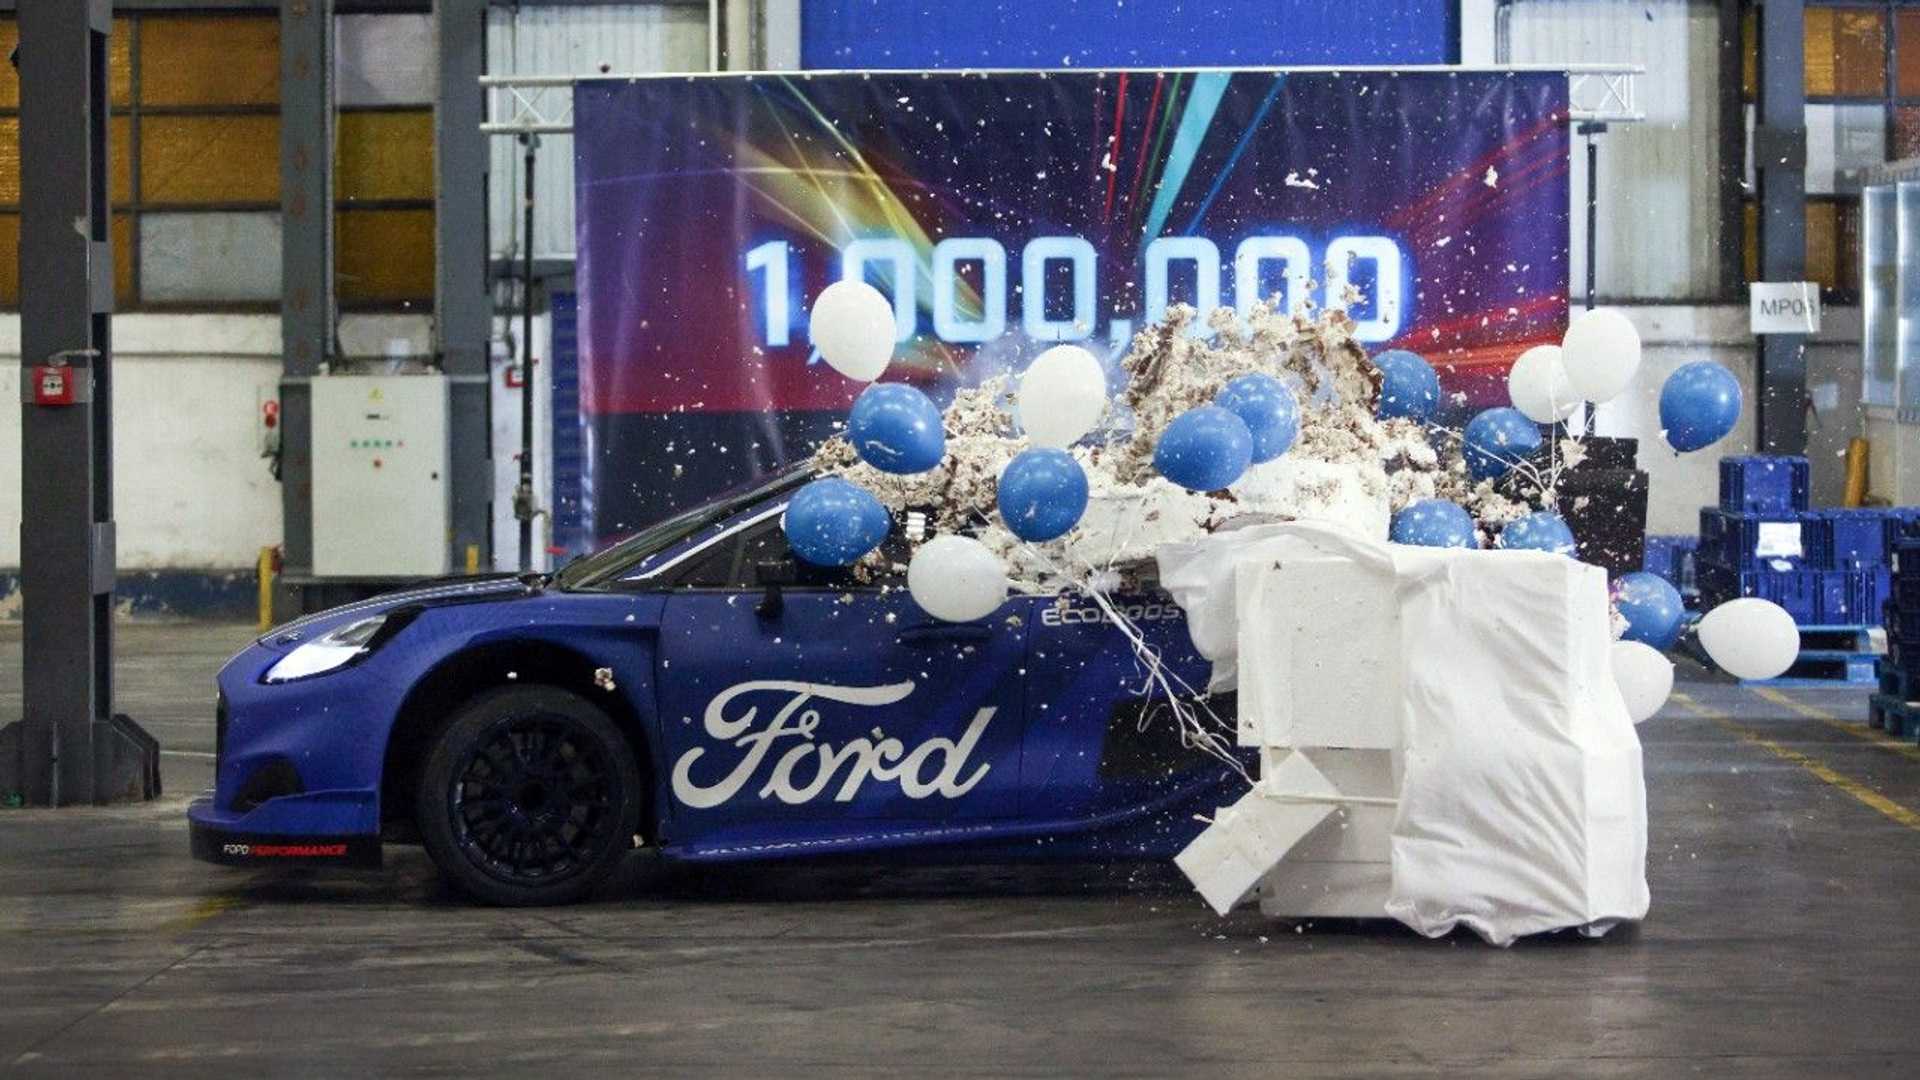 Ford Puma Rally1